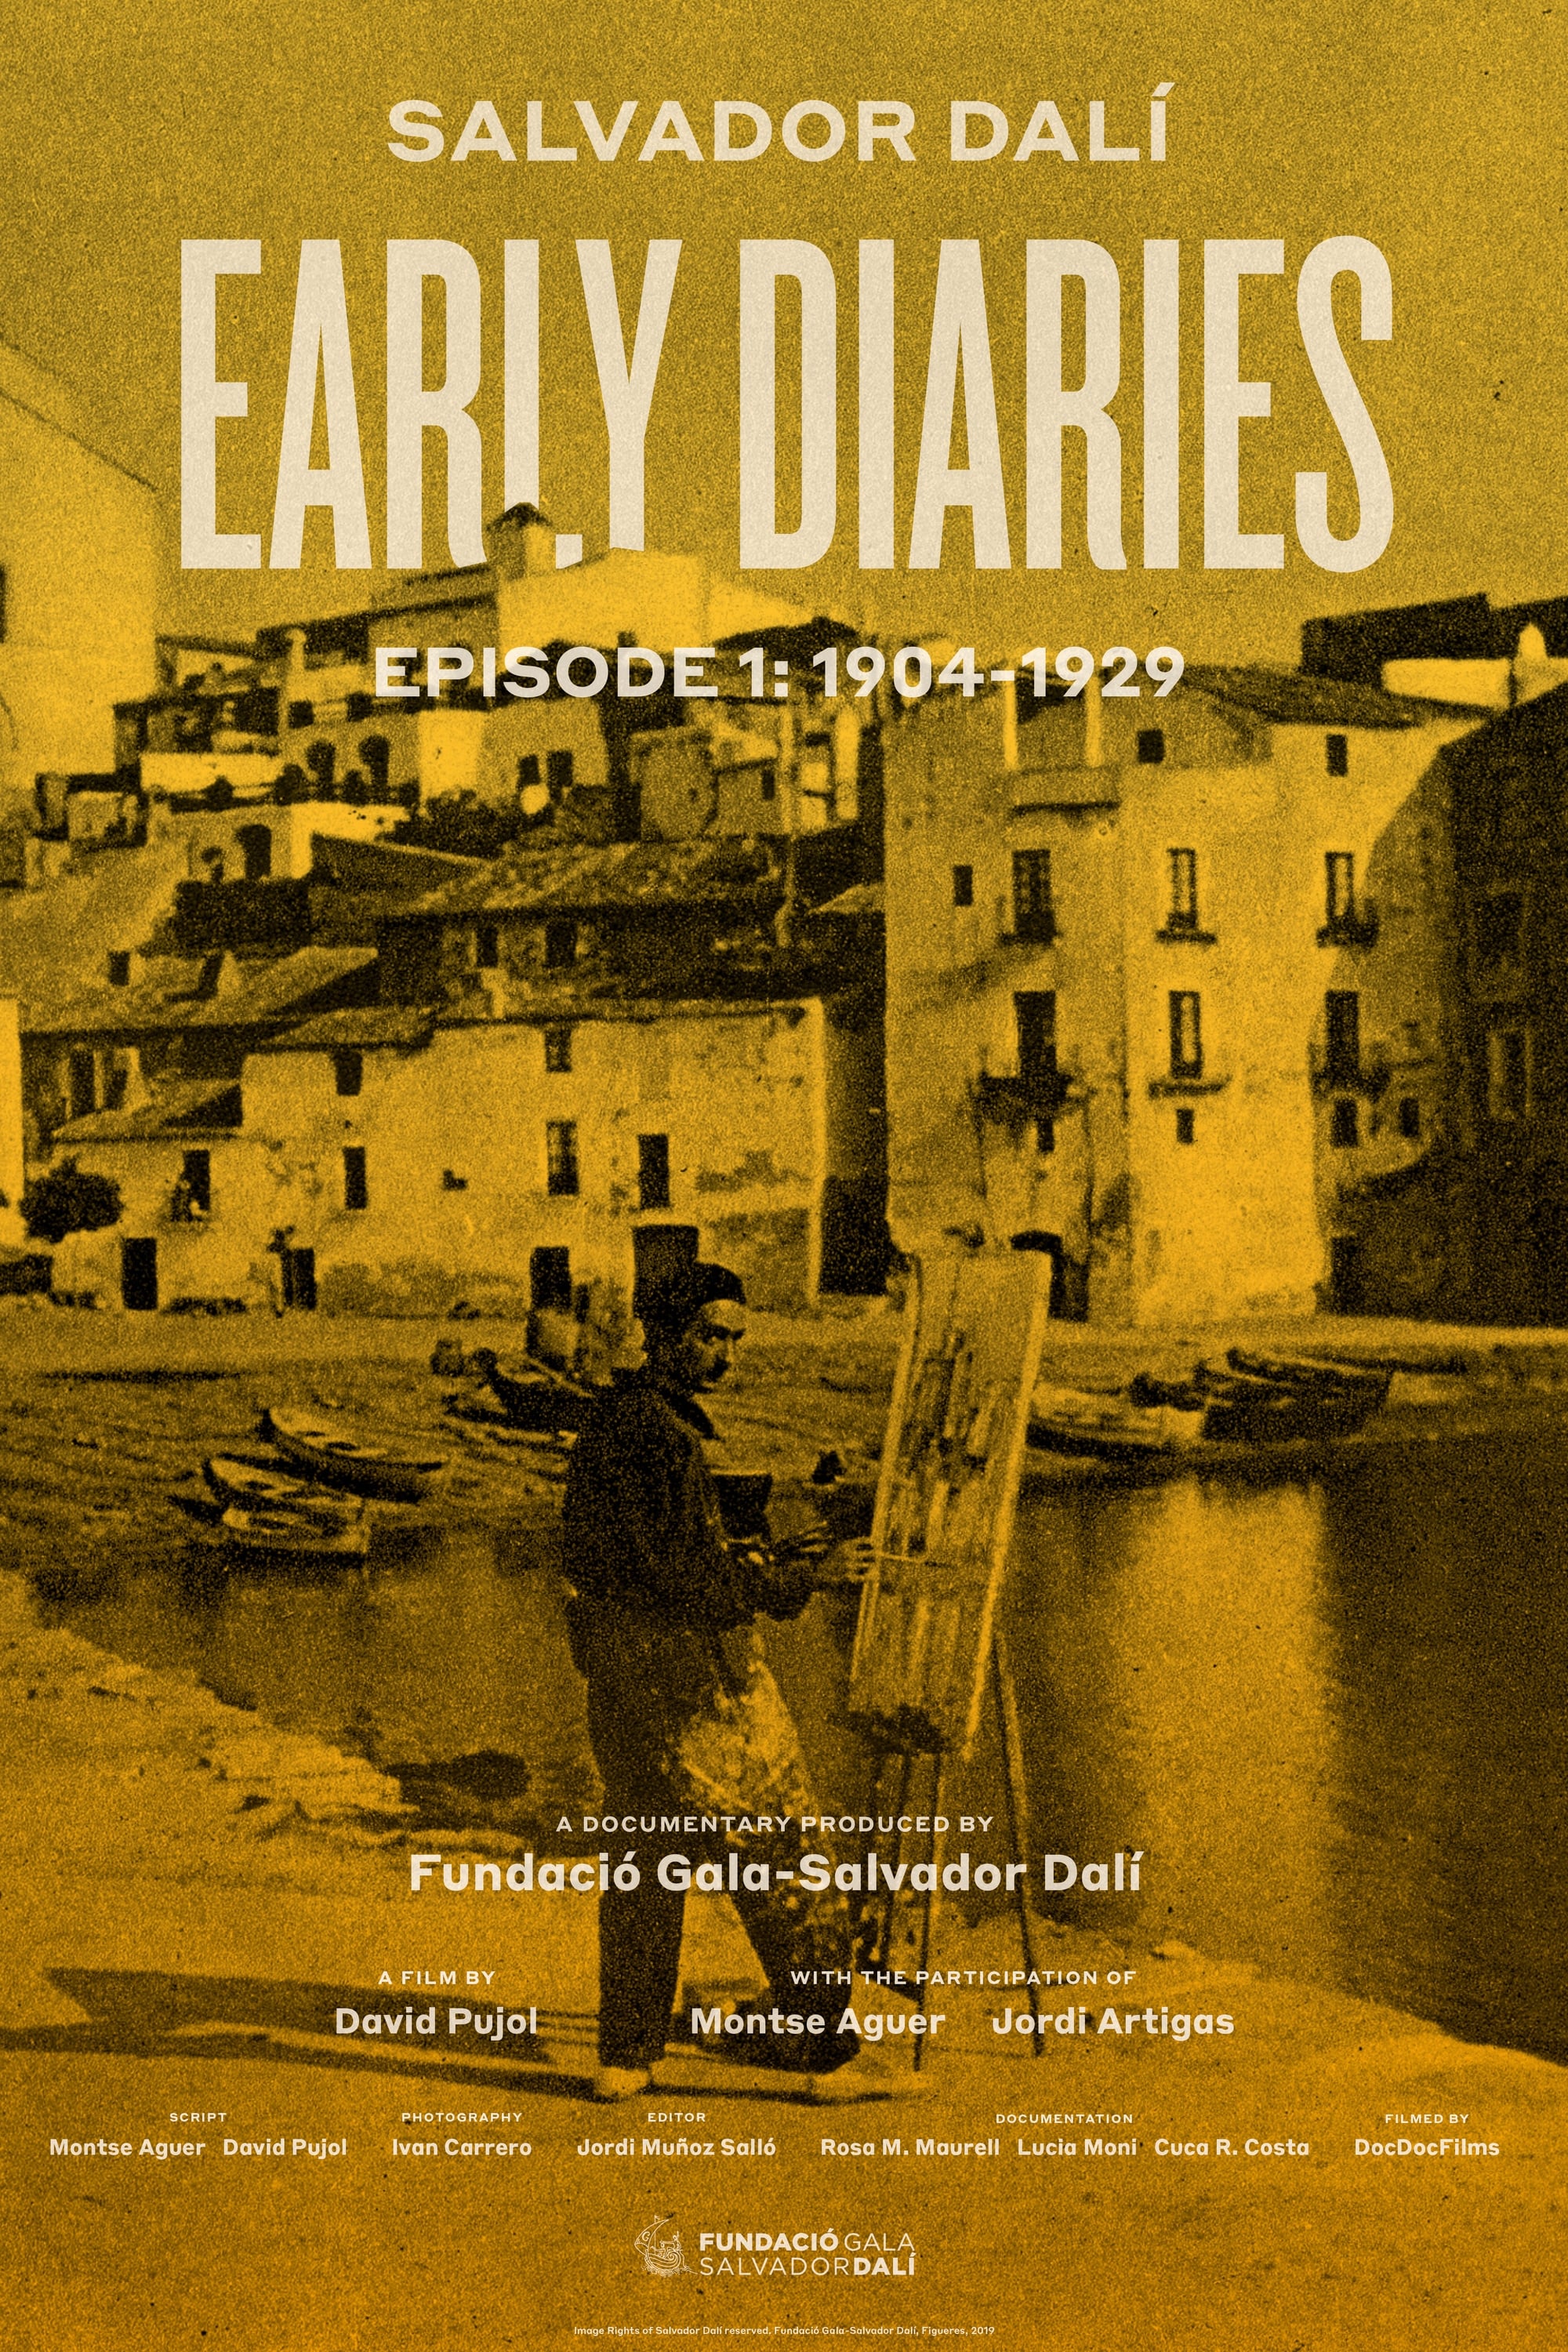 Salvador Dalí: Early Diaries – Episode 1: 1904-1929